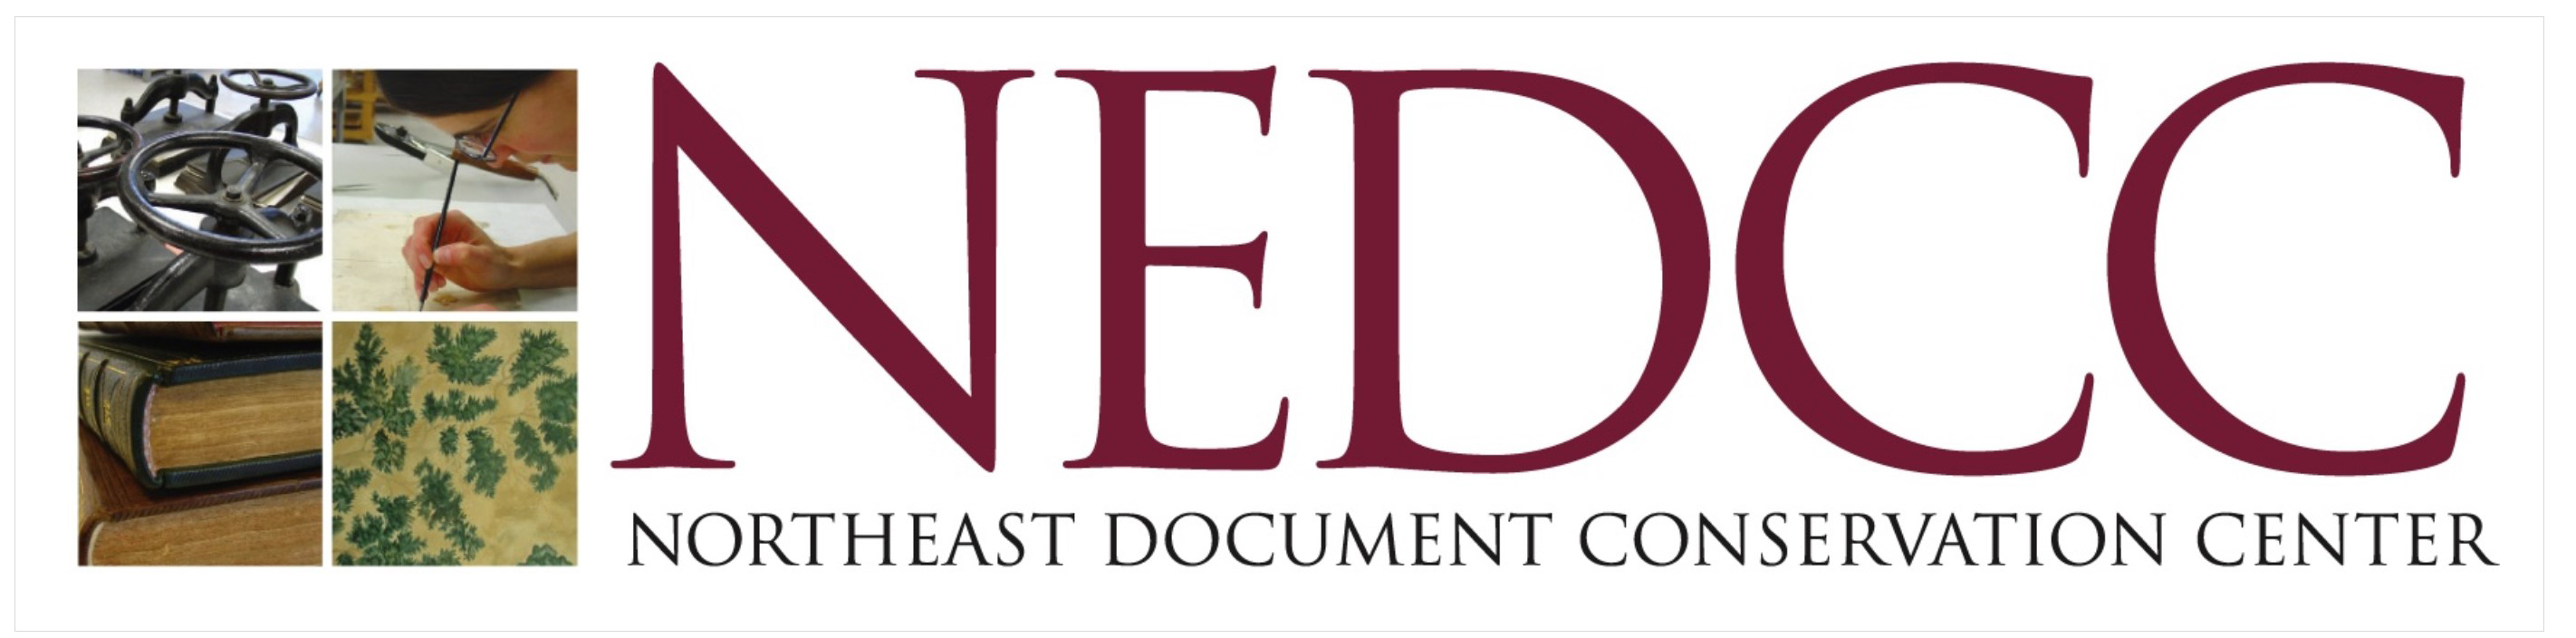 NEDCC | Northeast Document Conservation Center logo